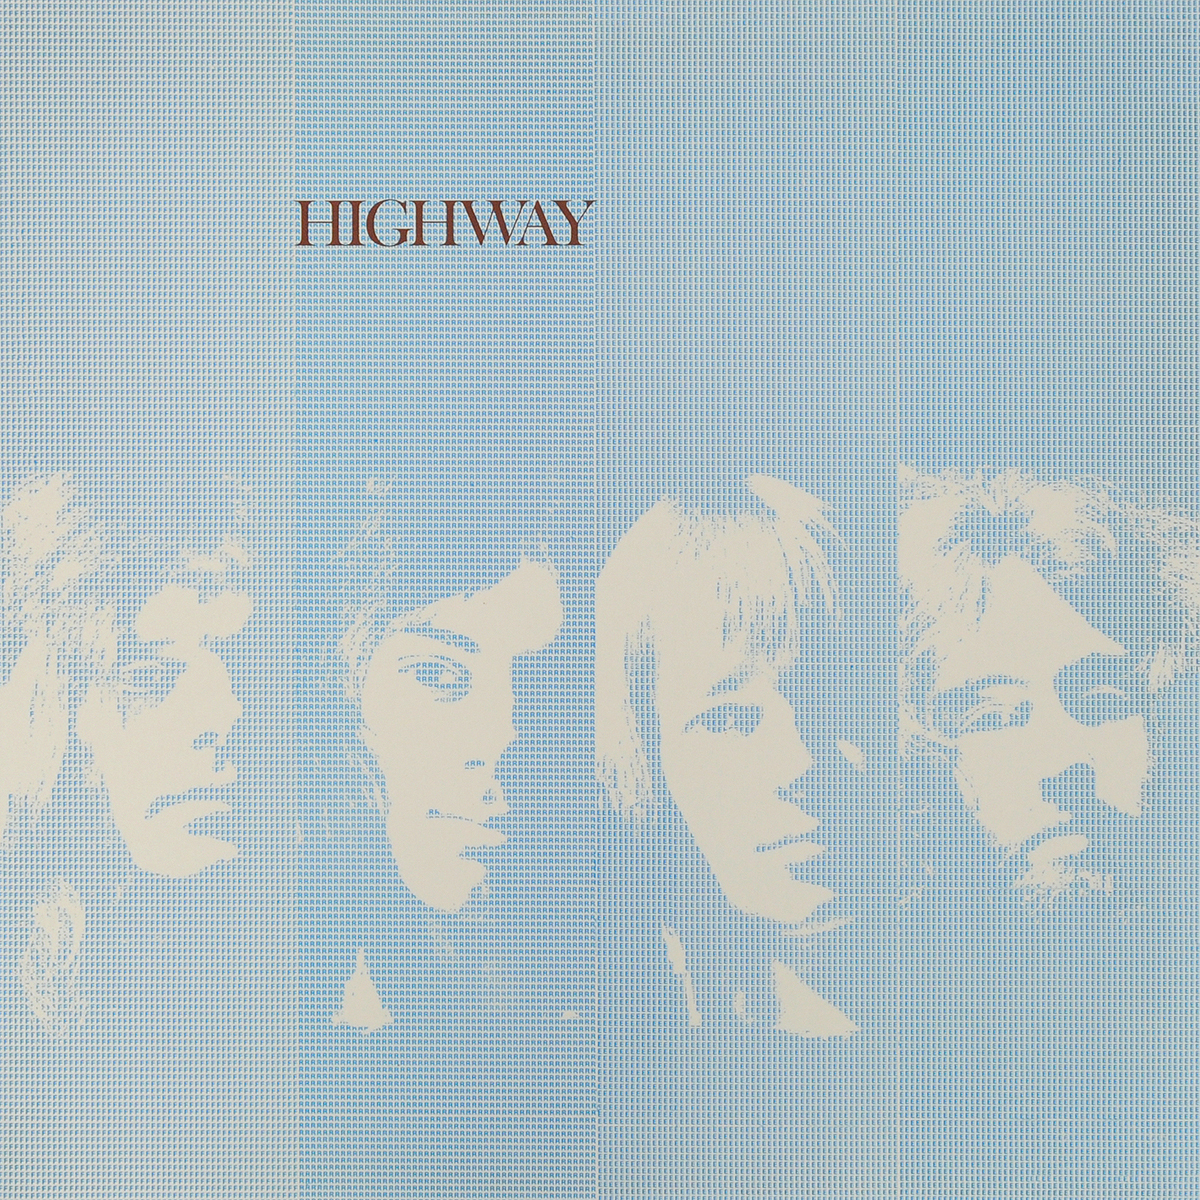 Free. Highway (LP)